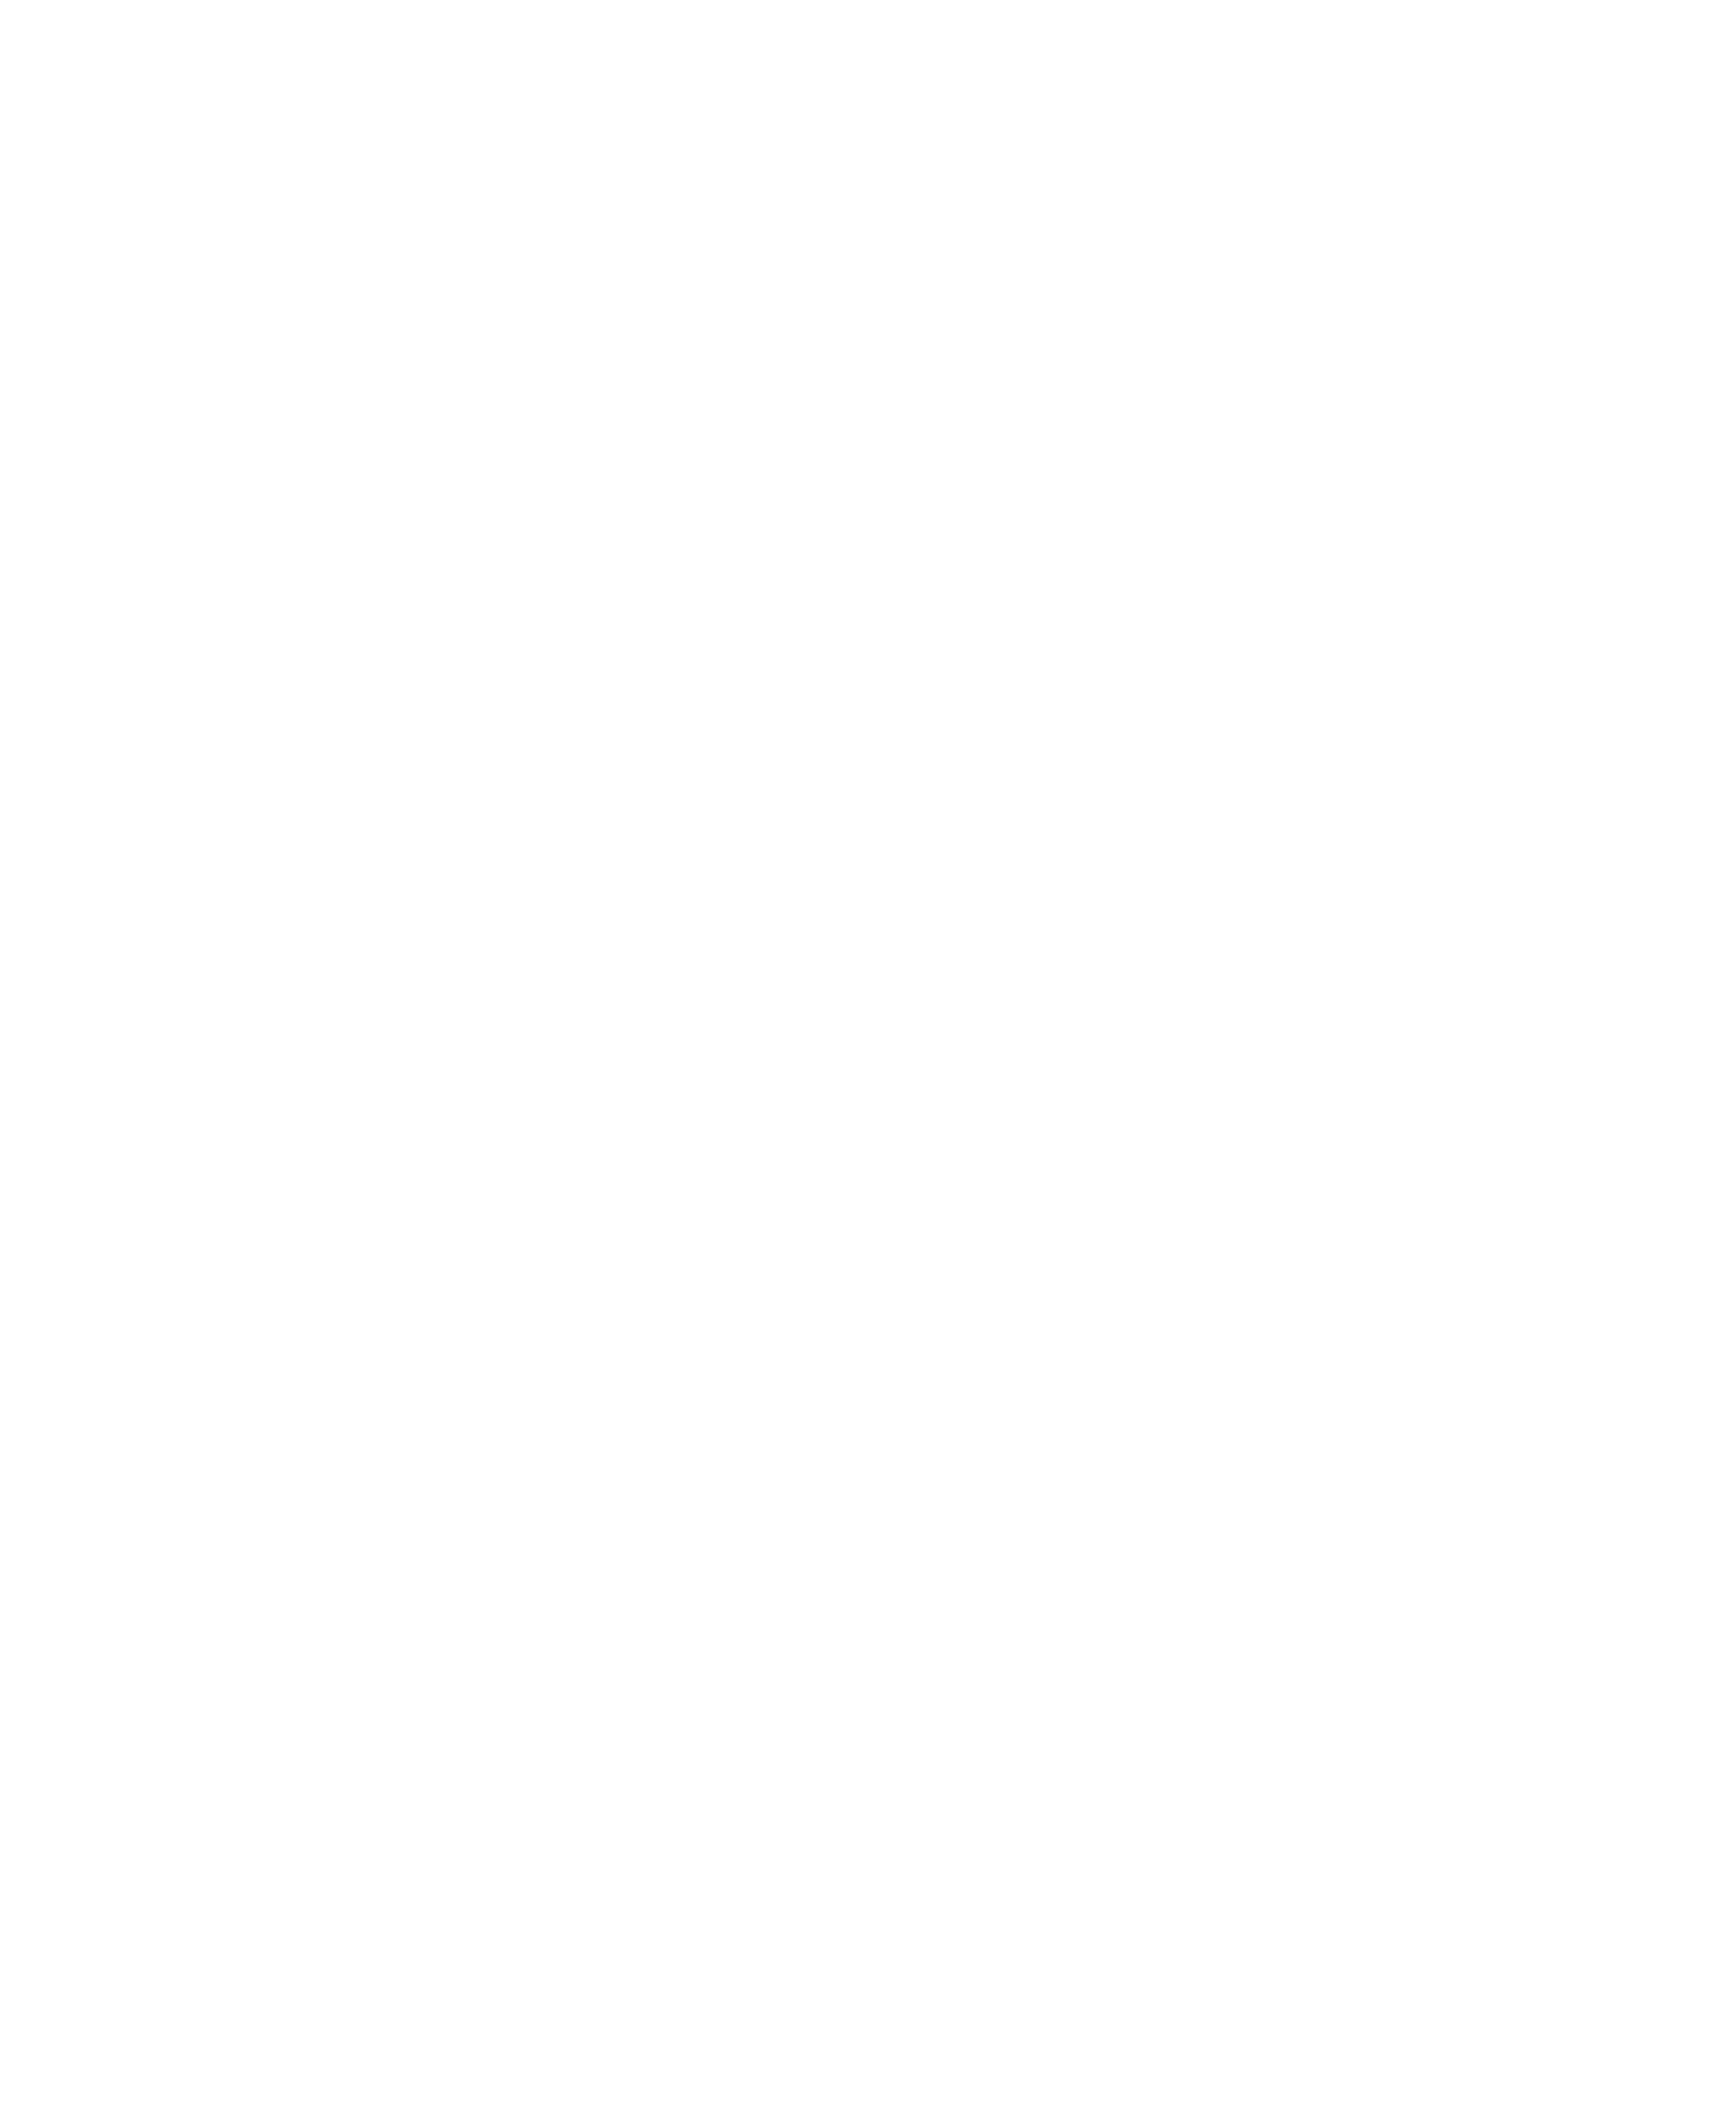 Stern 360 Media